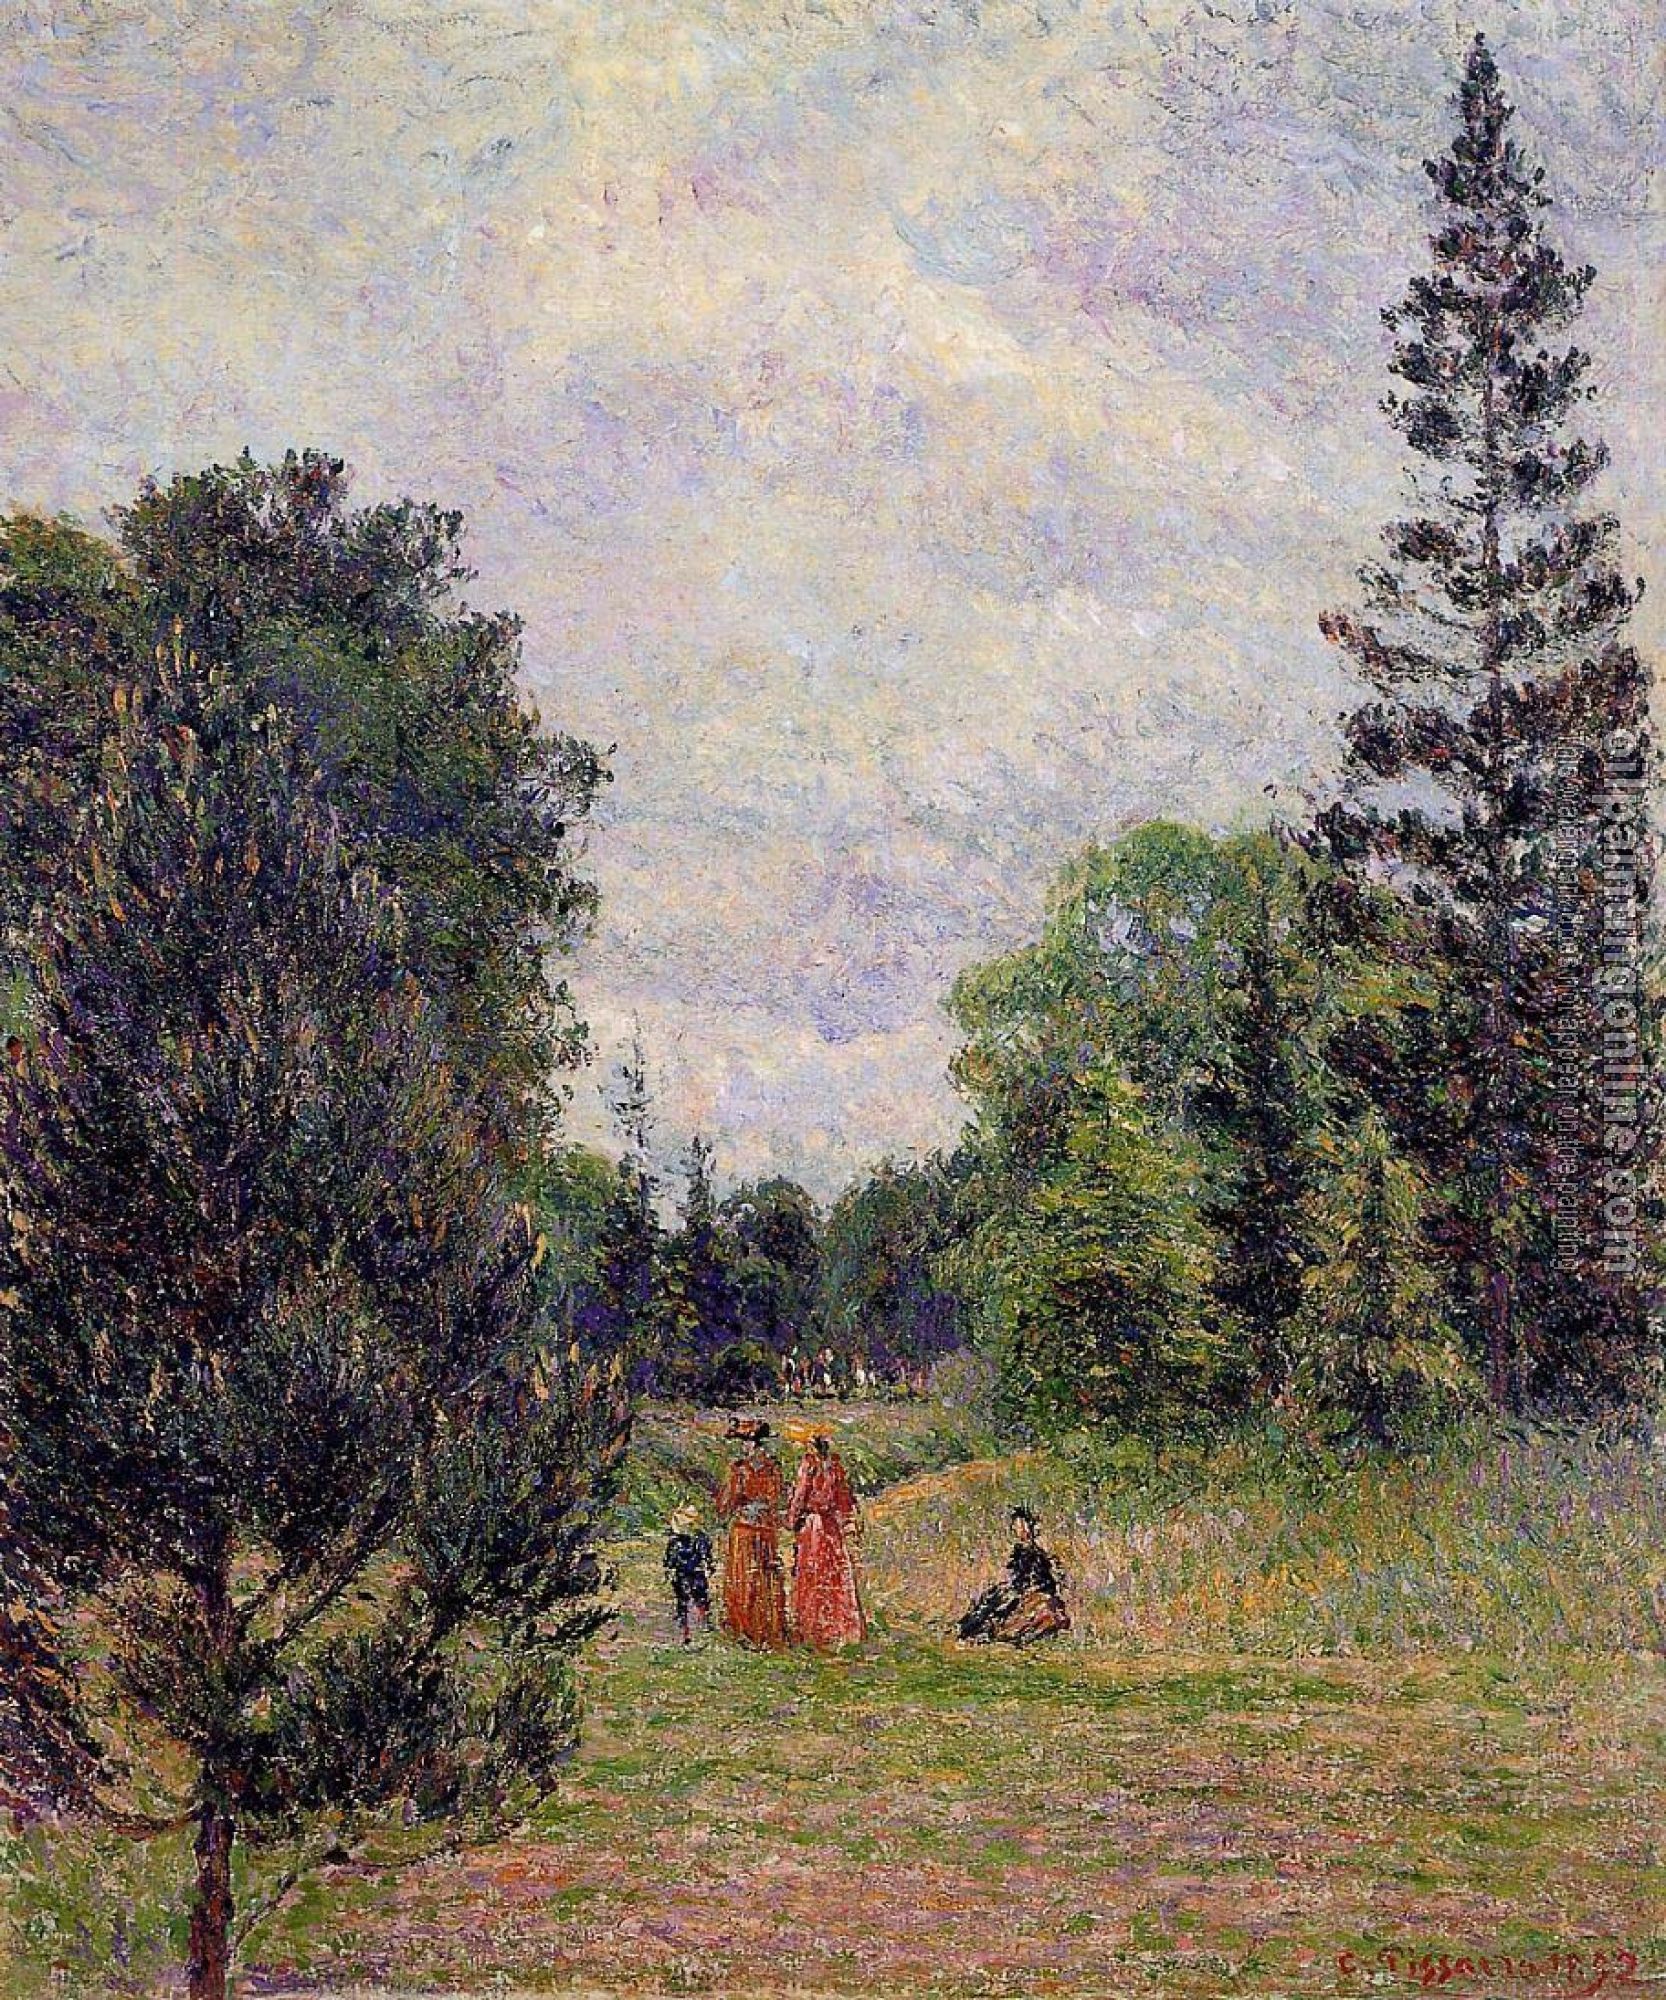 Pissarro, Camille - Kew Gardens, Crossroads near the Pond